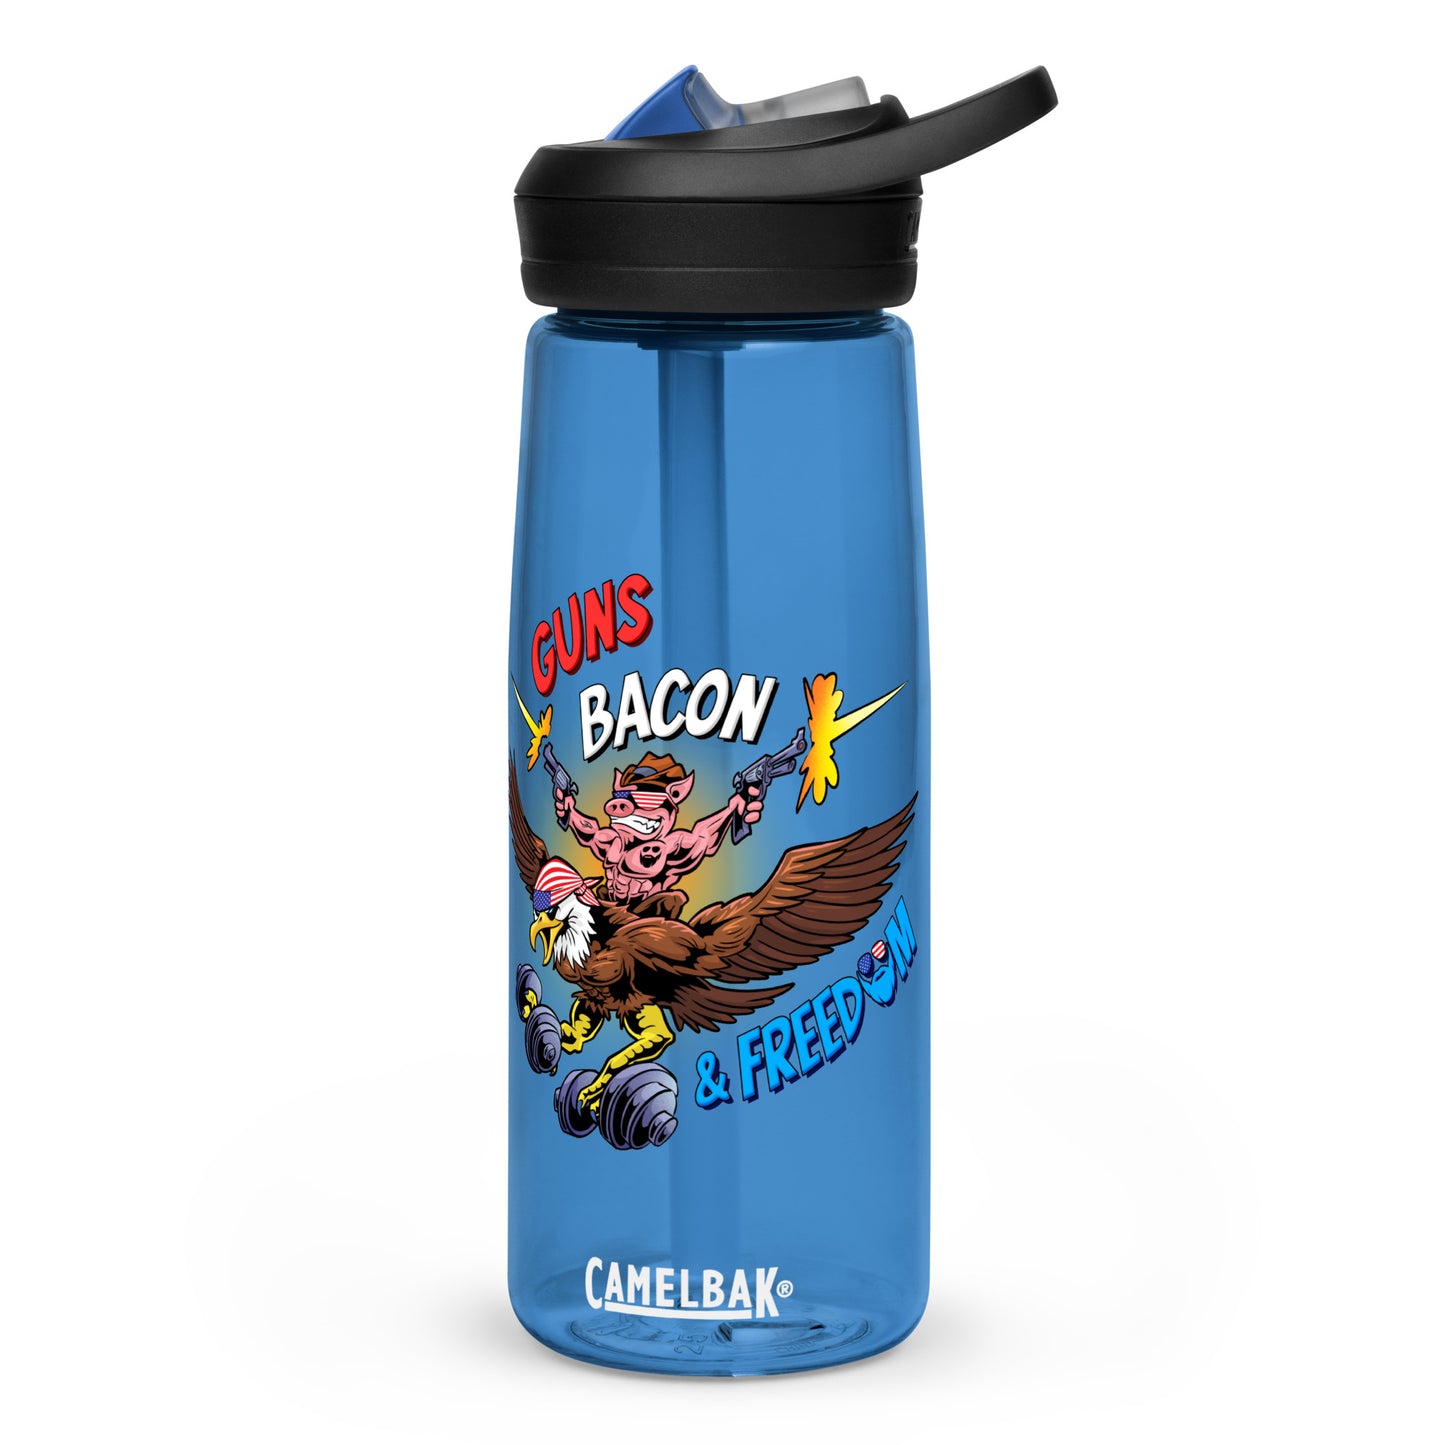 Guns, Bacon & Freedom (Image) Water Bottle